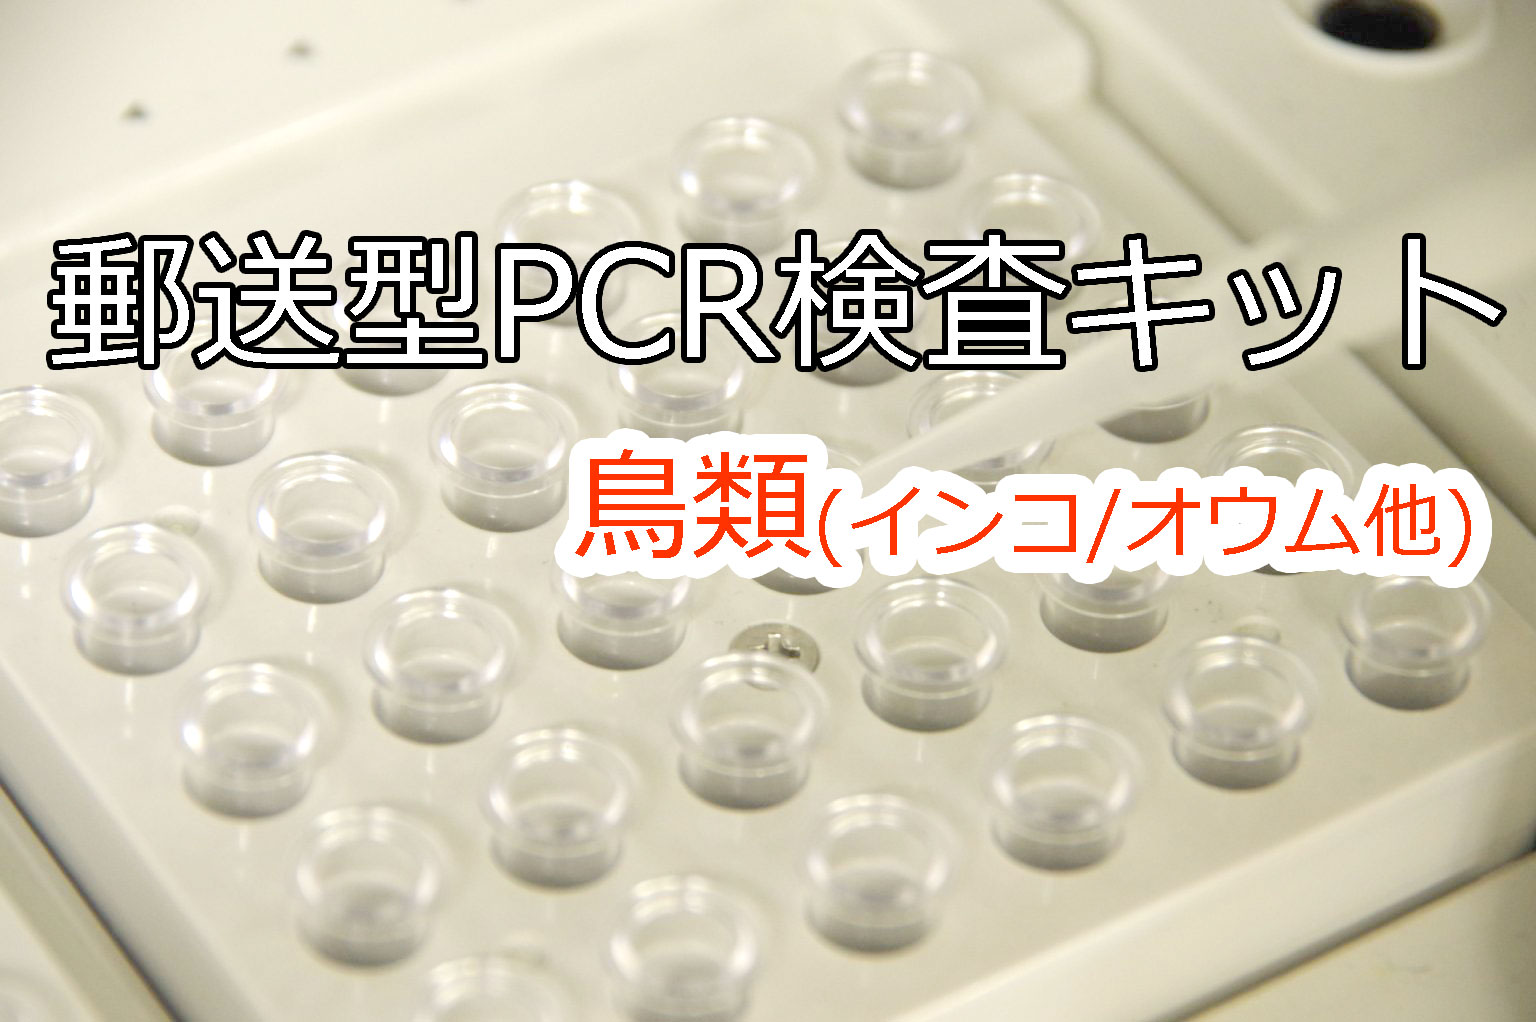 送料無料 | 小鳥の遺伝子検査キット(2種類)　郵送型PCR法遺伝子検査